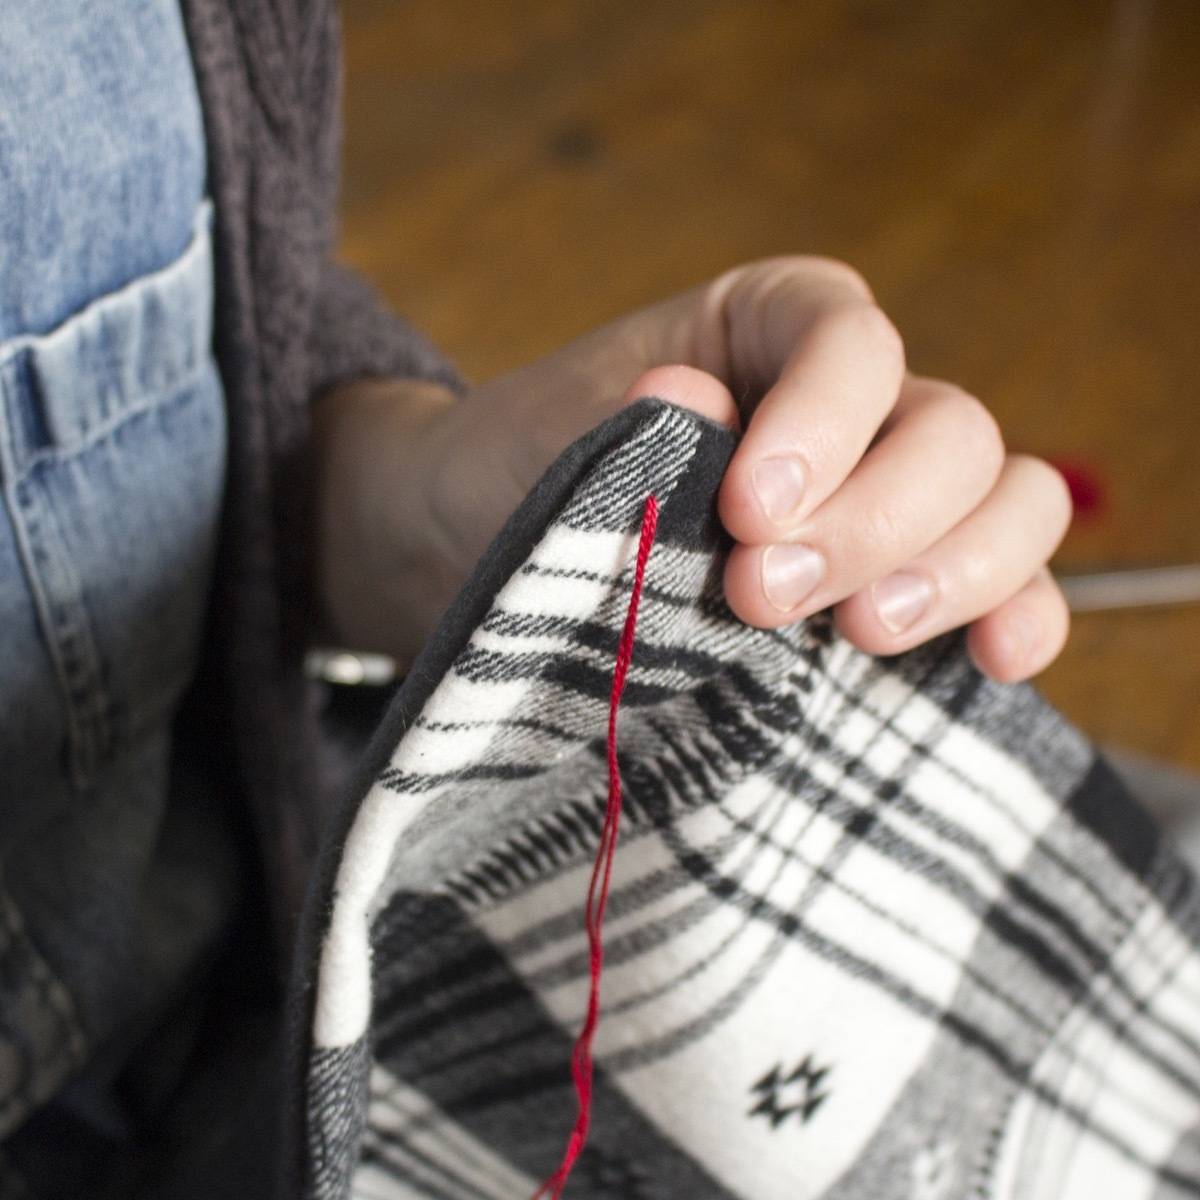 How to do a blanket stitch: Step 1